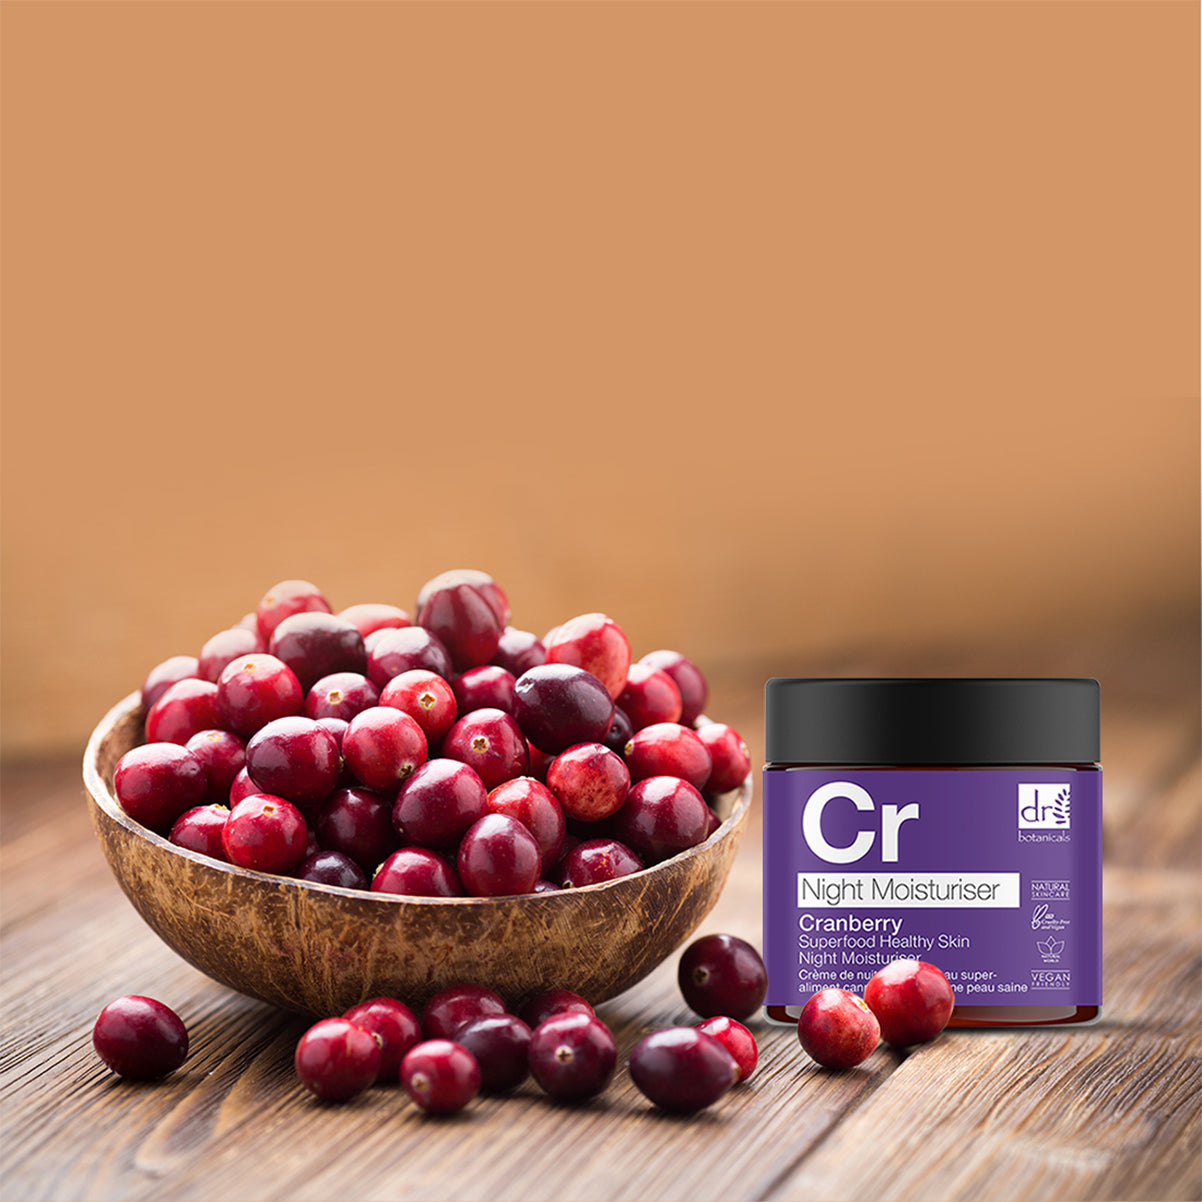 Cranberry Superfood Healthy Skin Night Moisturiser 60ml